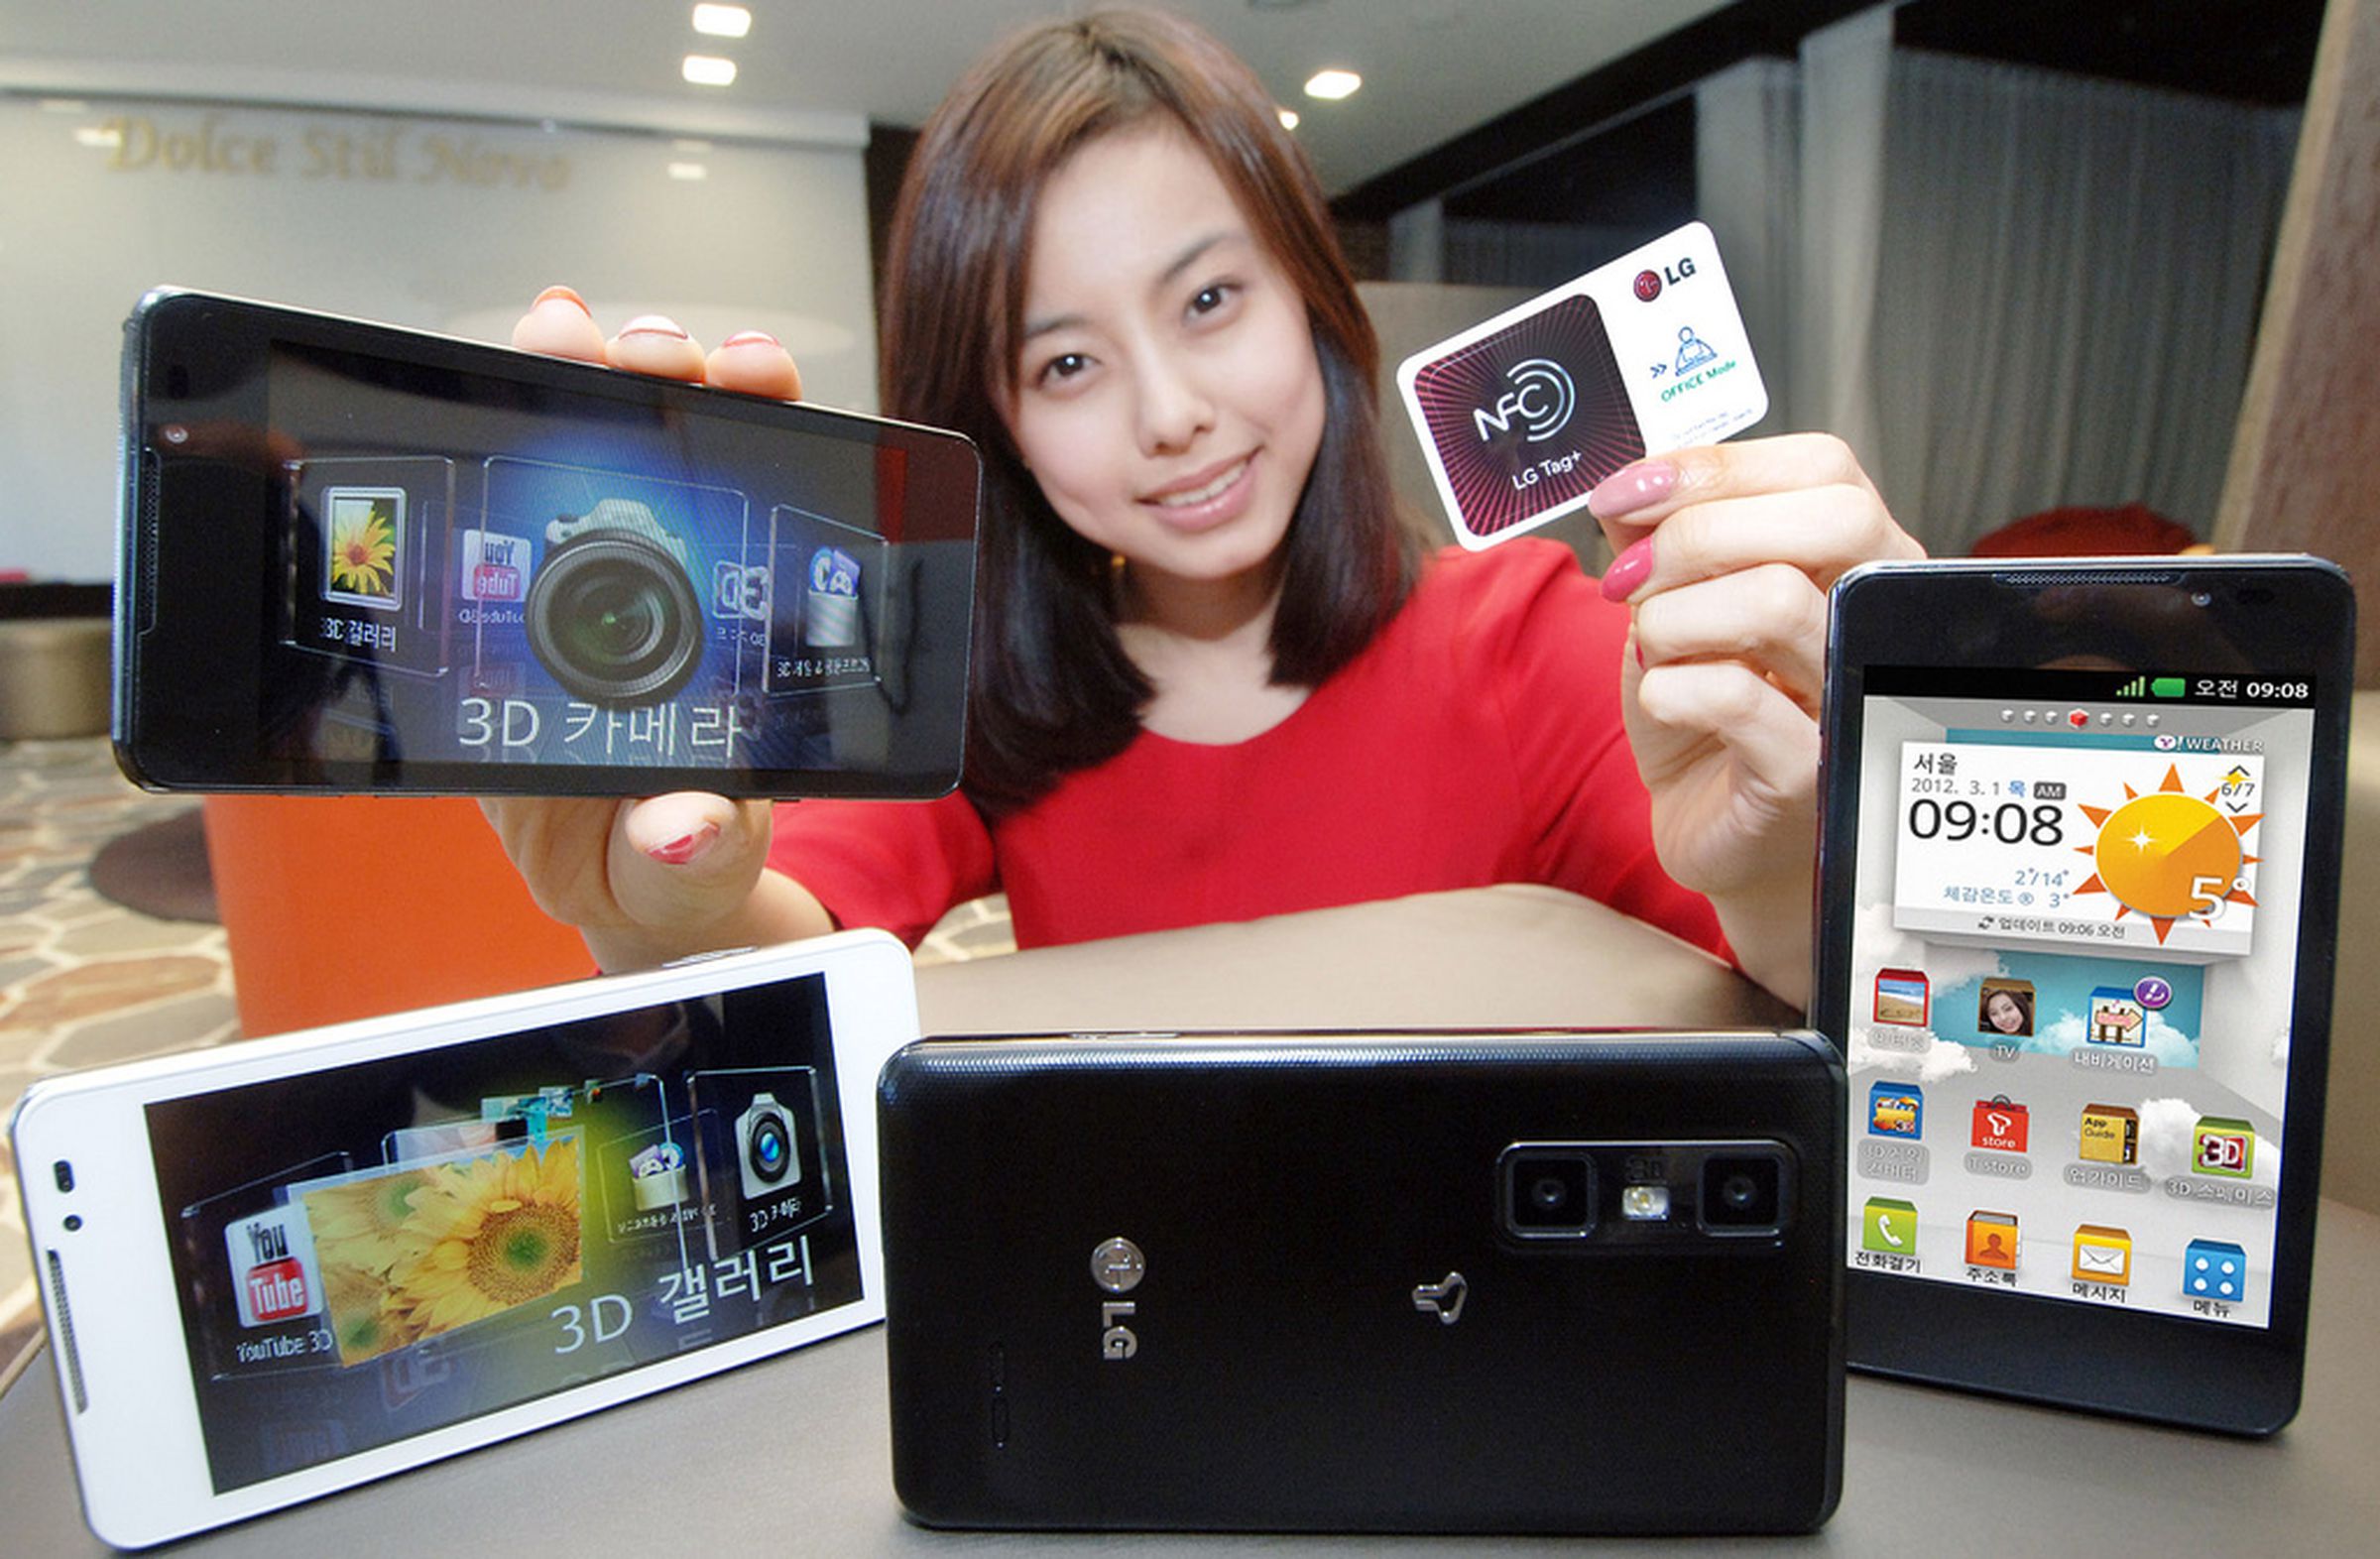 LG Optimus 3D Cube press images